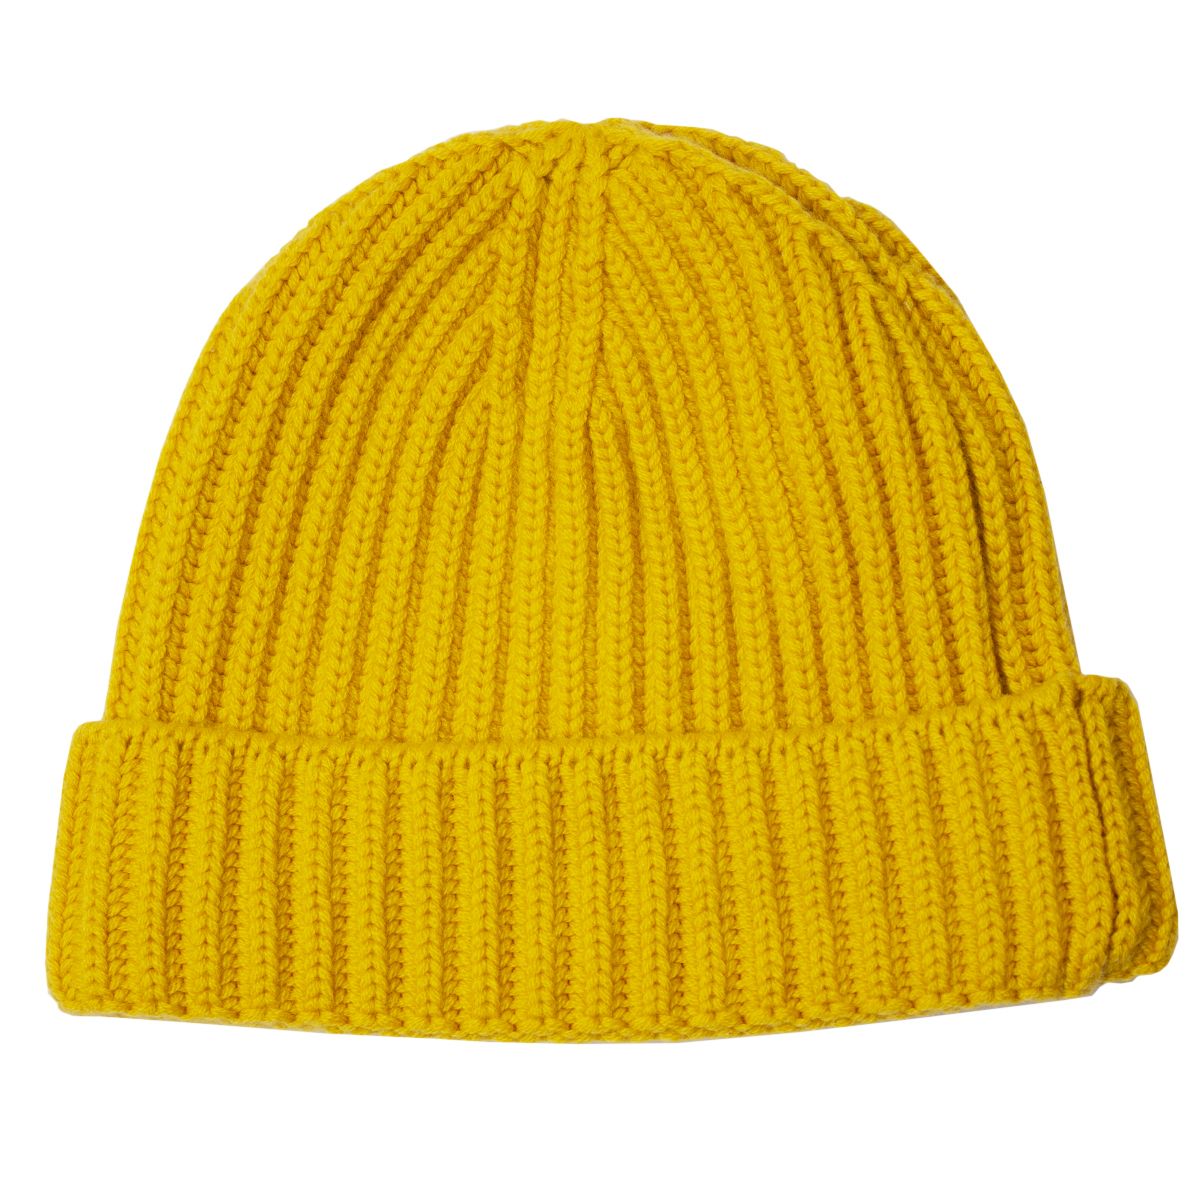 Fisherman Knit 8ply Cashmere Hat - Goldeneye Yellow  Robert Old   